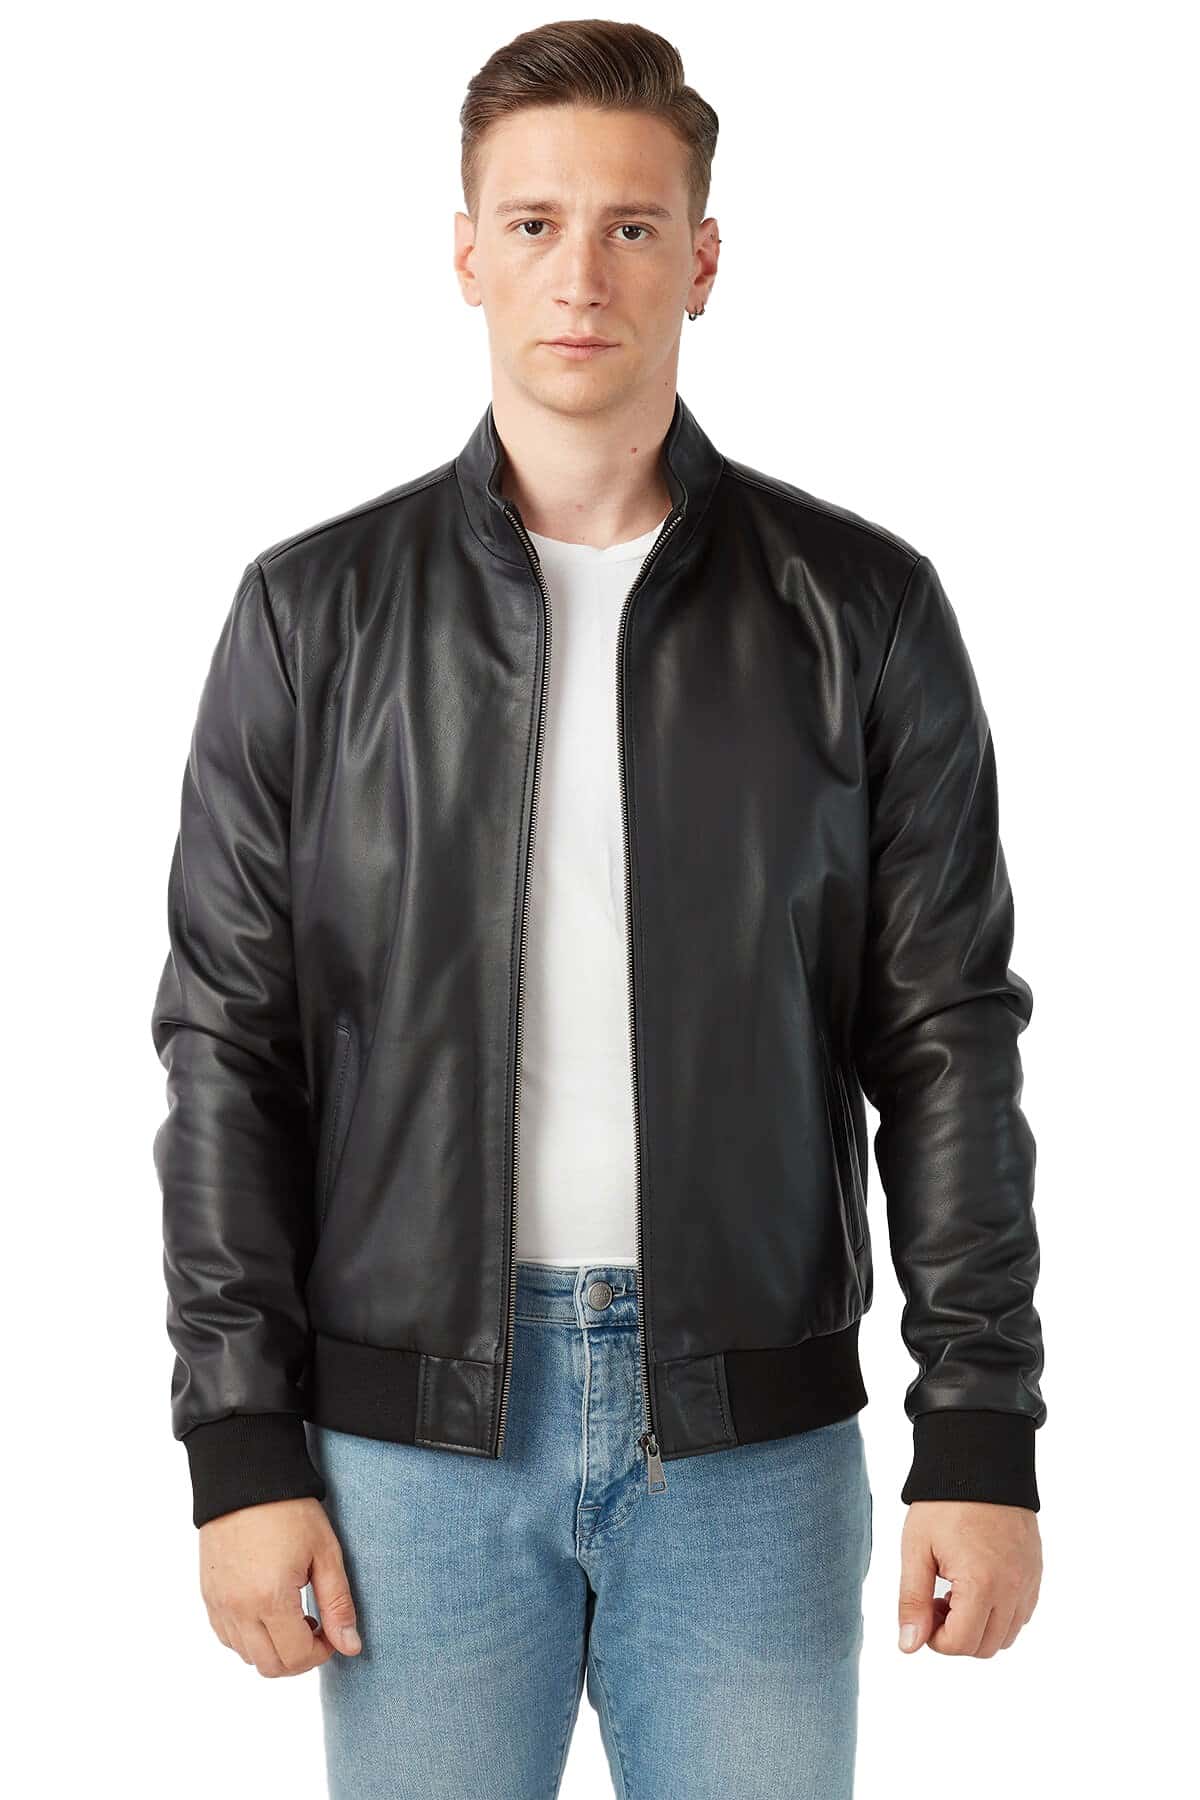 Maverick Men's 100 % Real Black Leather College Style Jacket